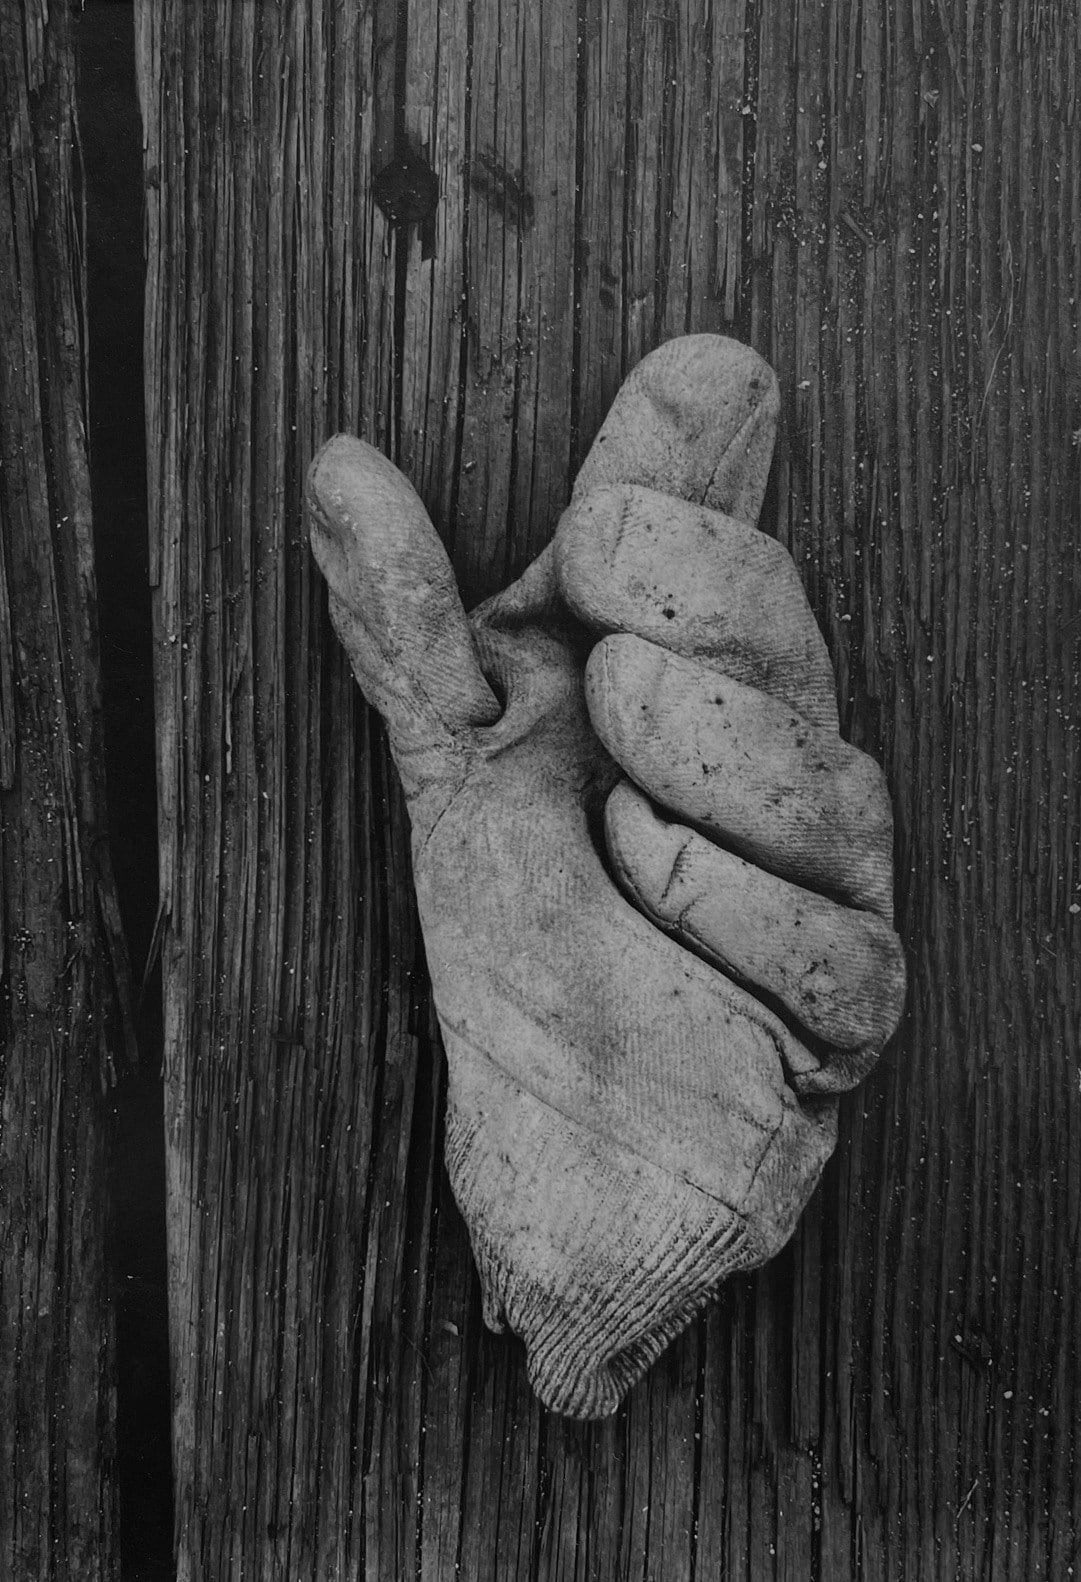 Aaron Siskind, Gloucester I H (Glove), 1944/1956